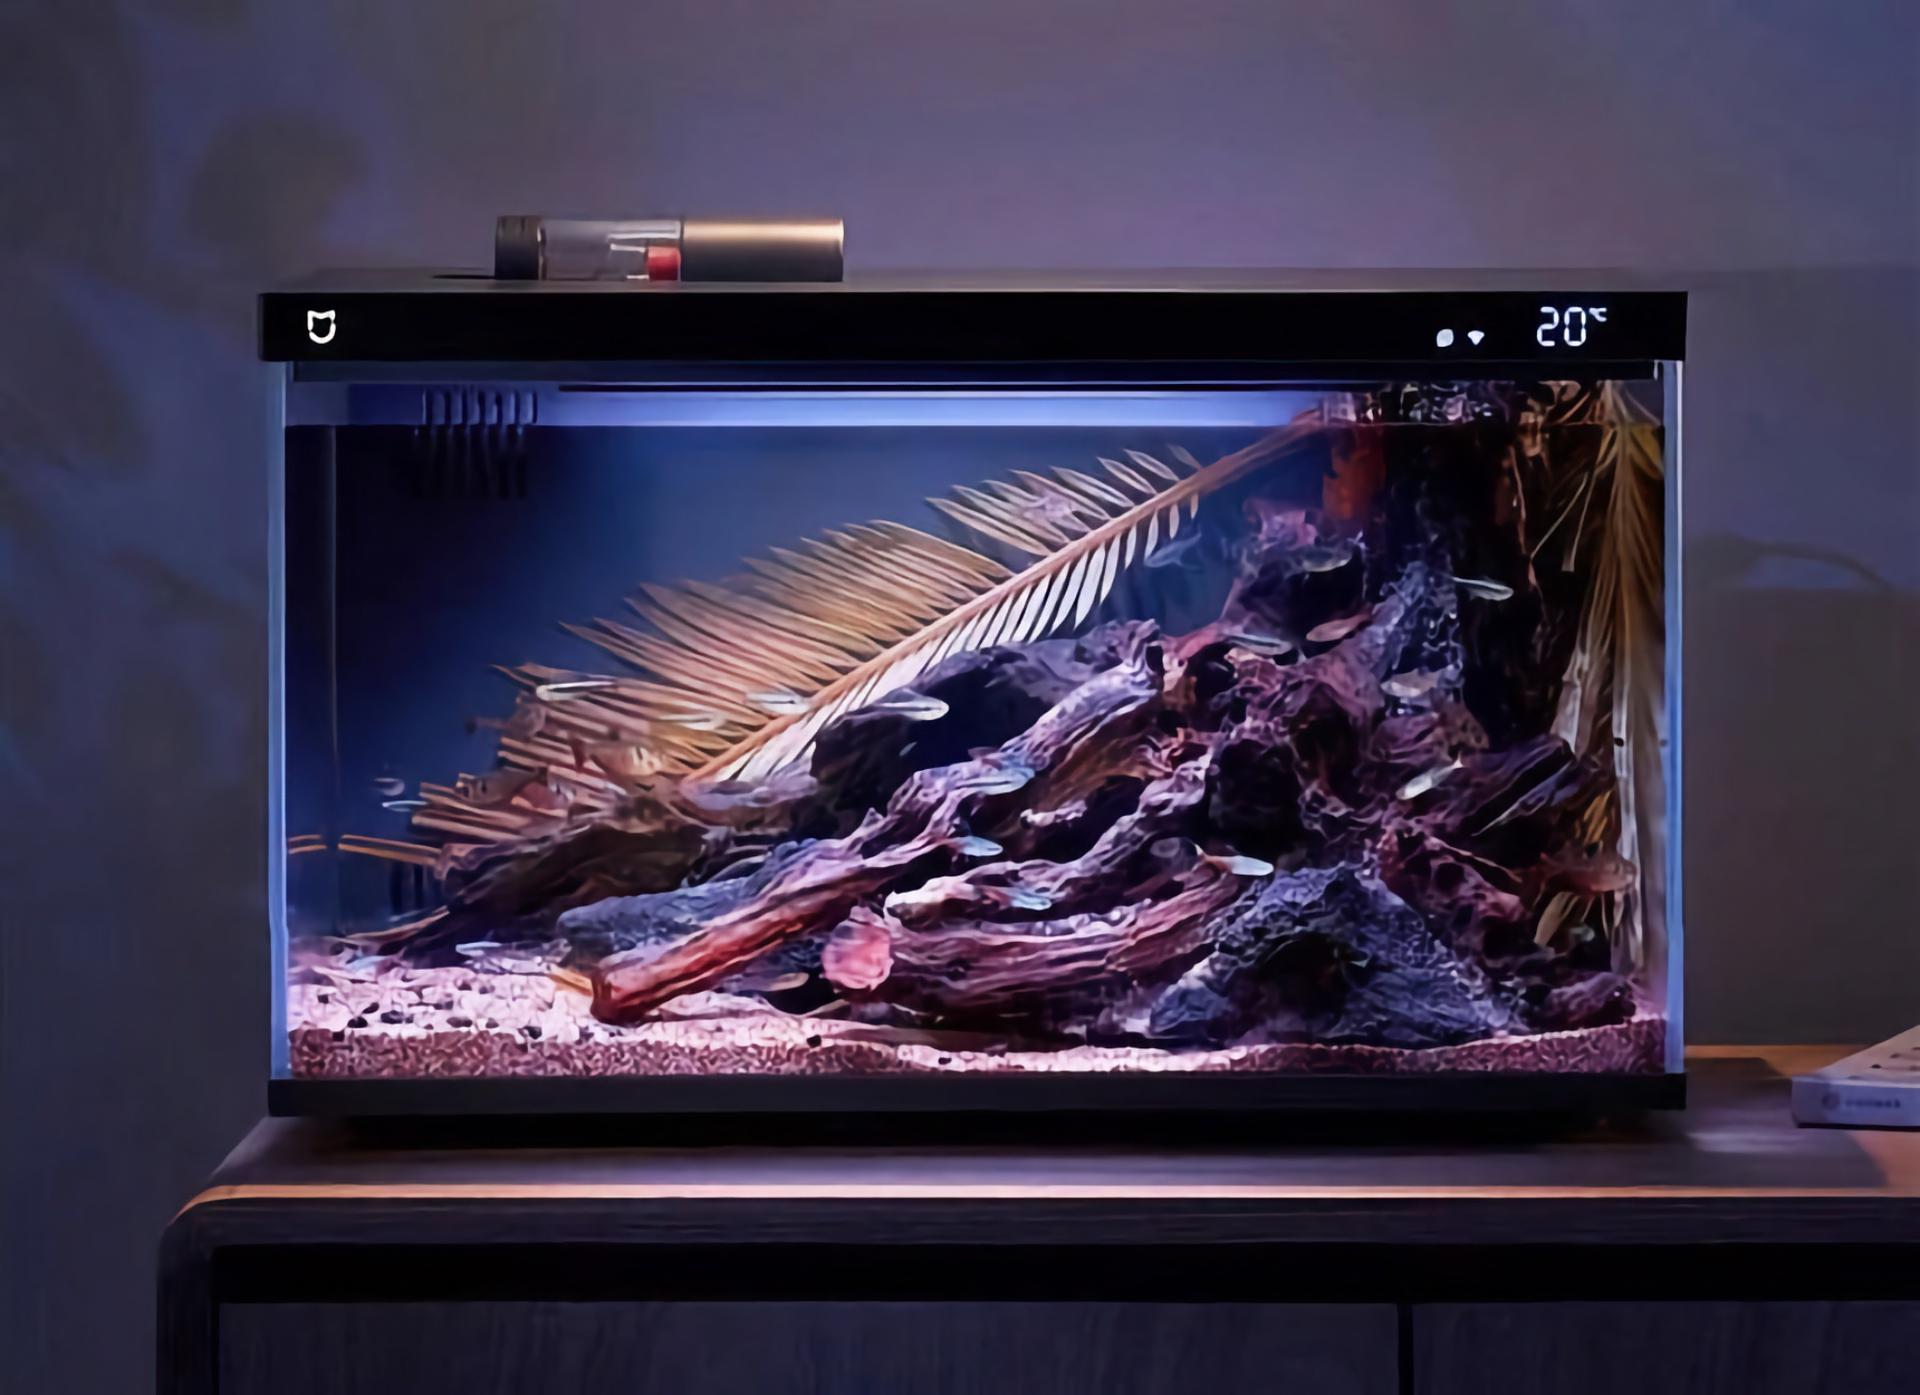 Xiaomi launches smart aquarium with temperature sensor, RGB lighting and remote fish feeding function